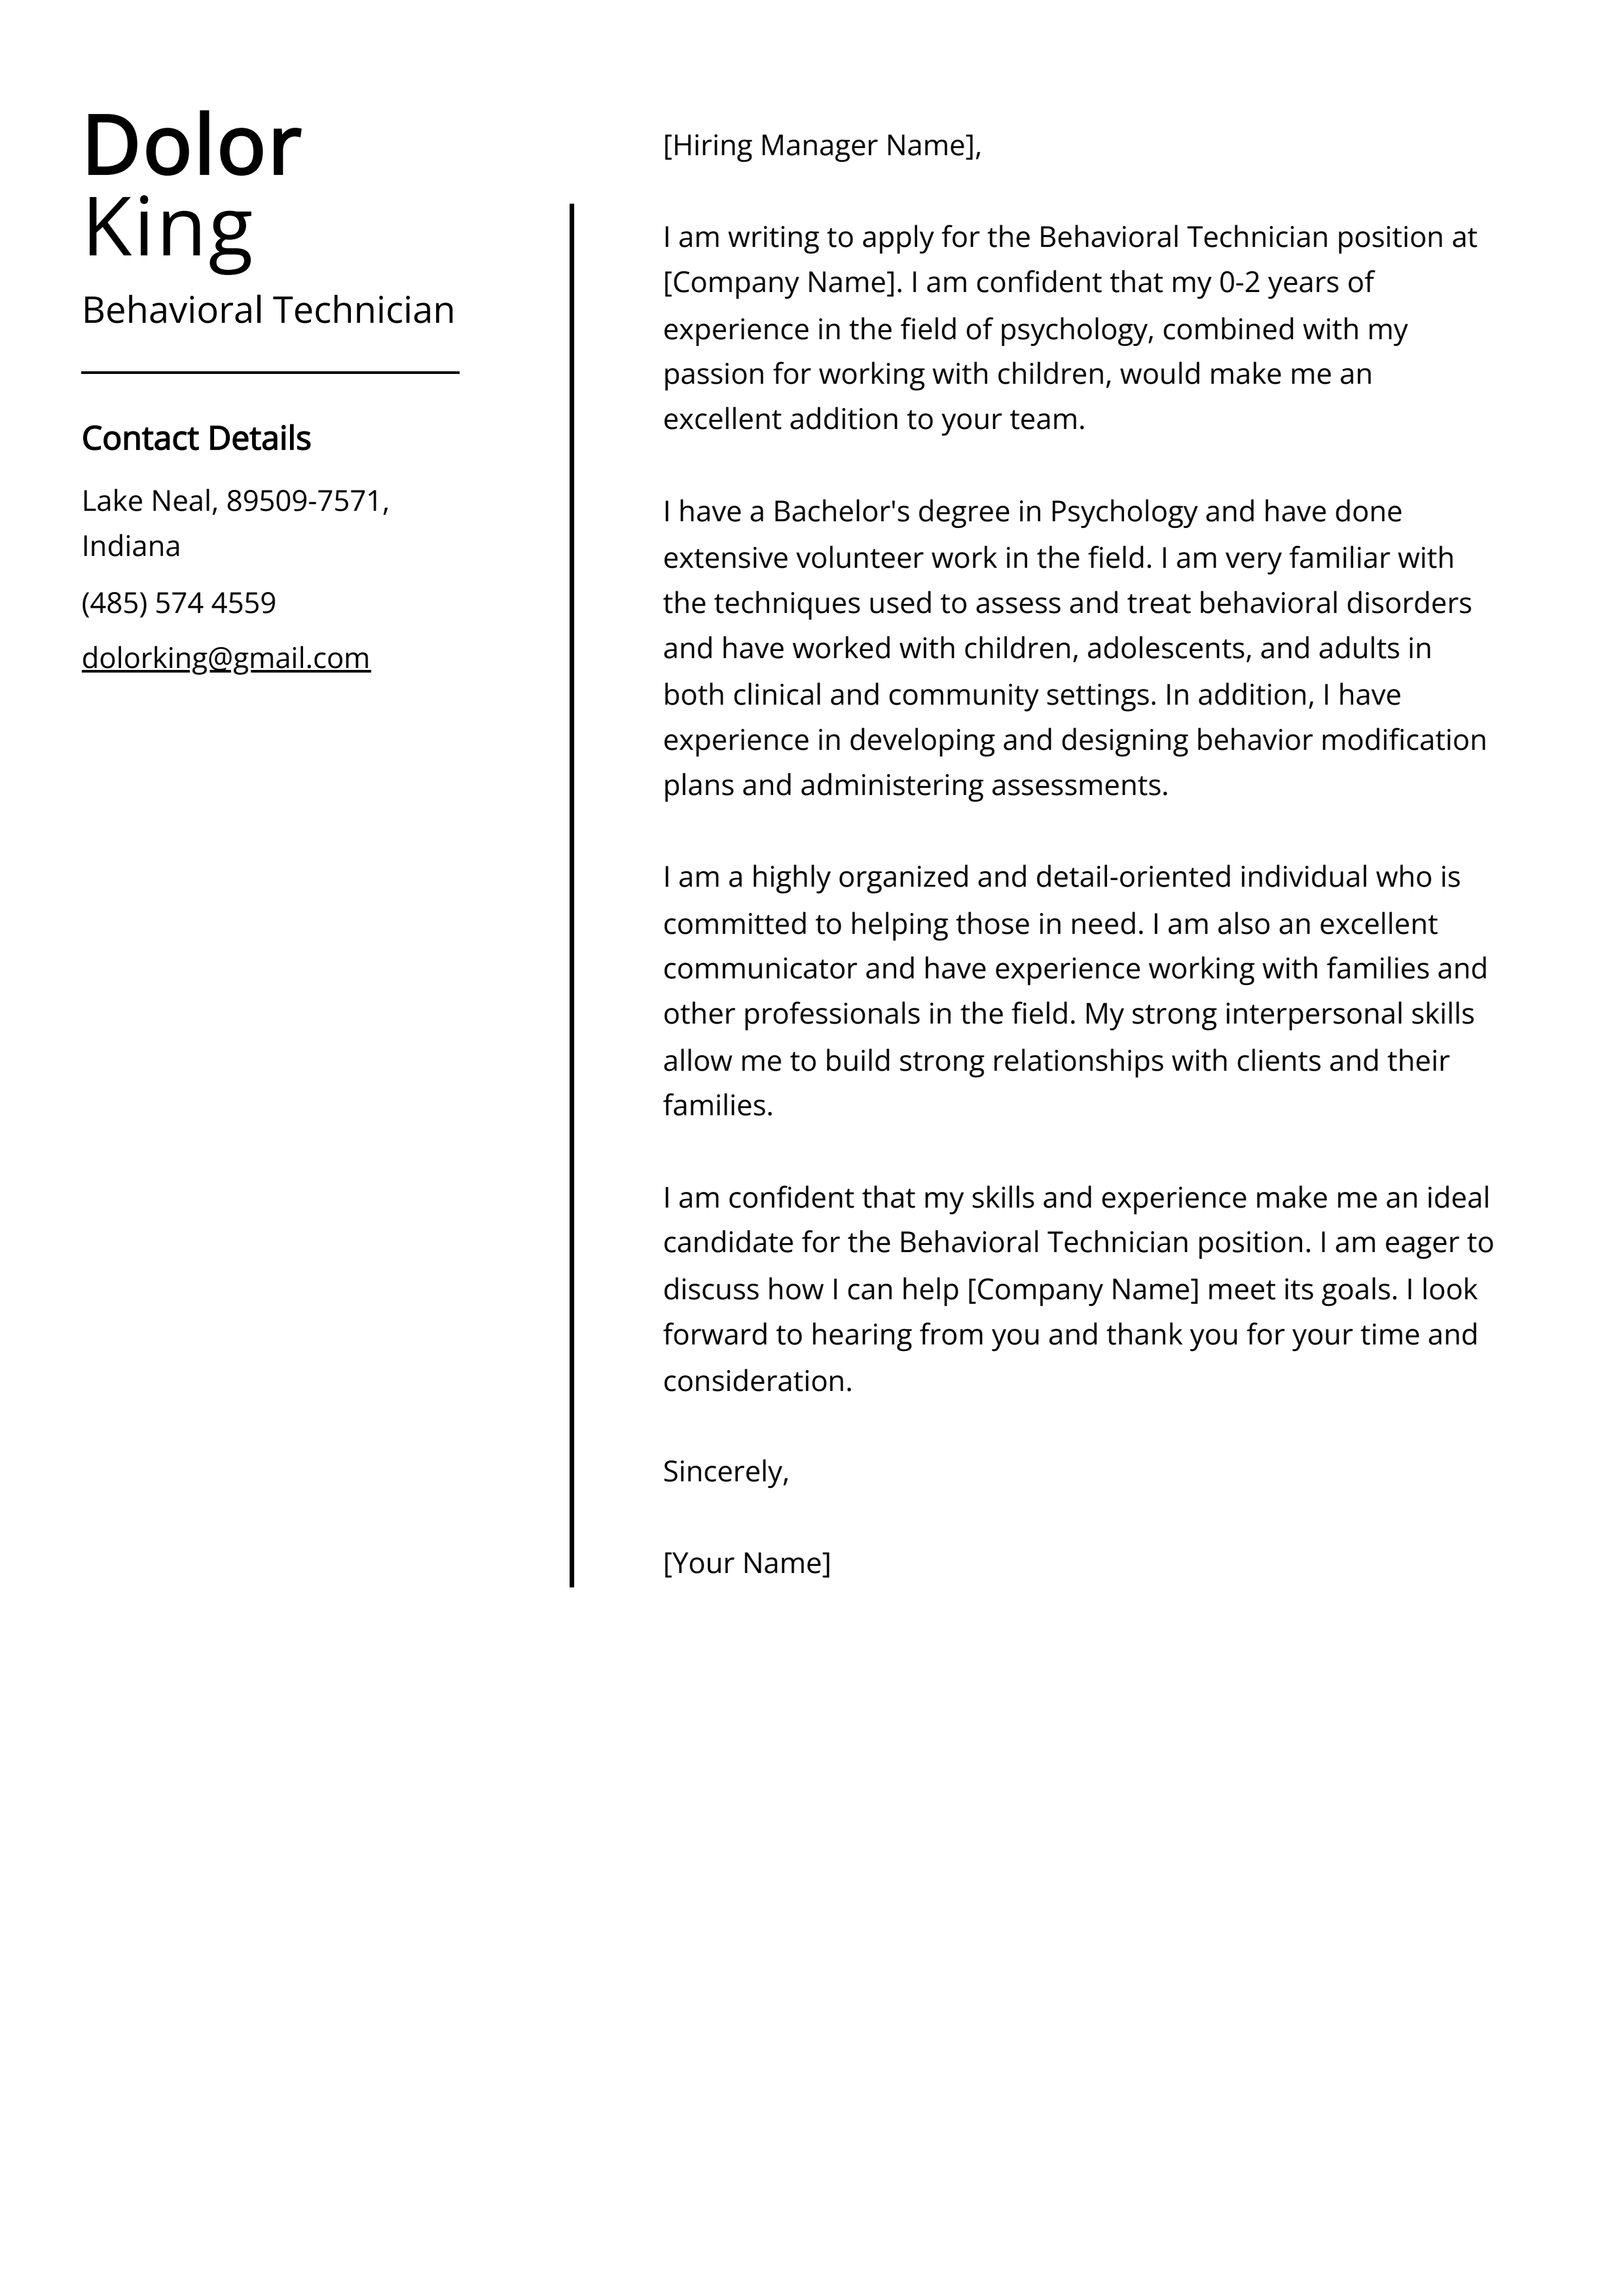 Behavioral Technician Cover Letter Example